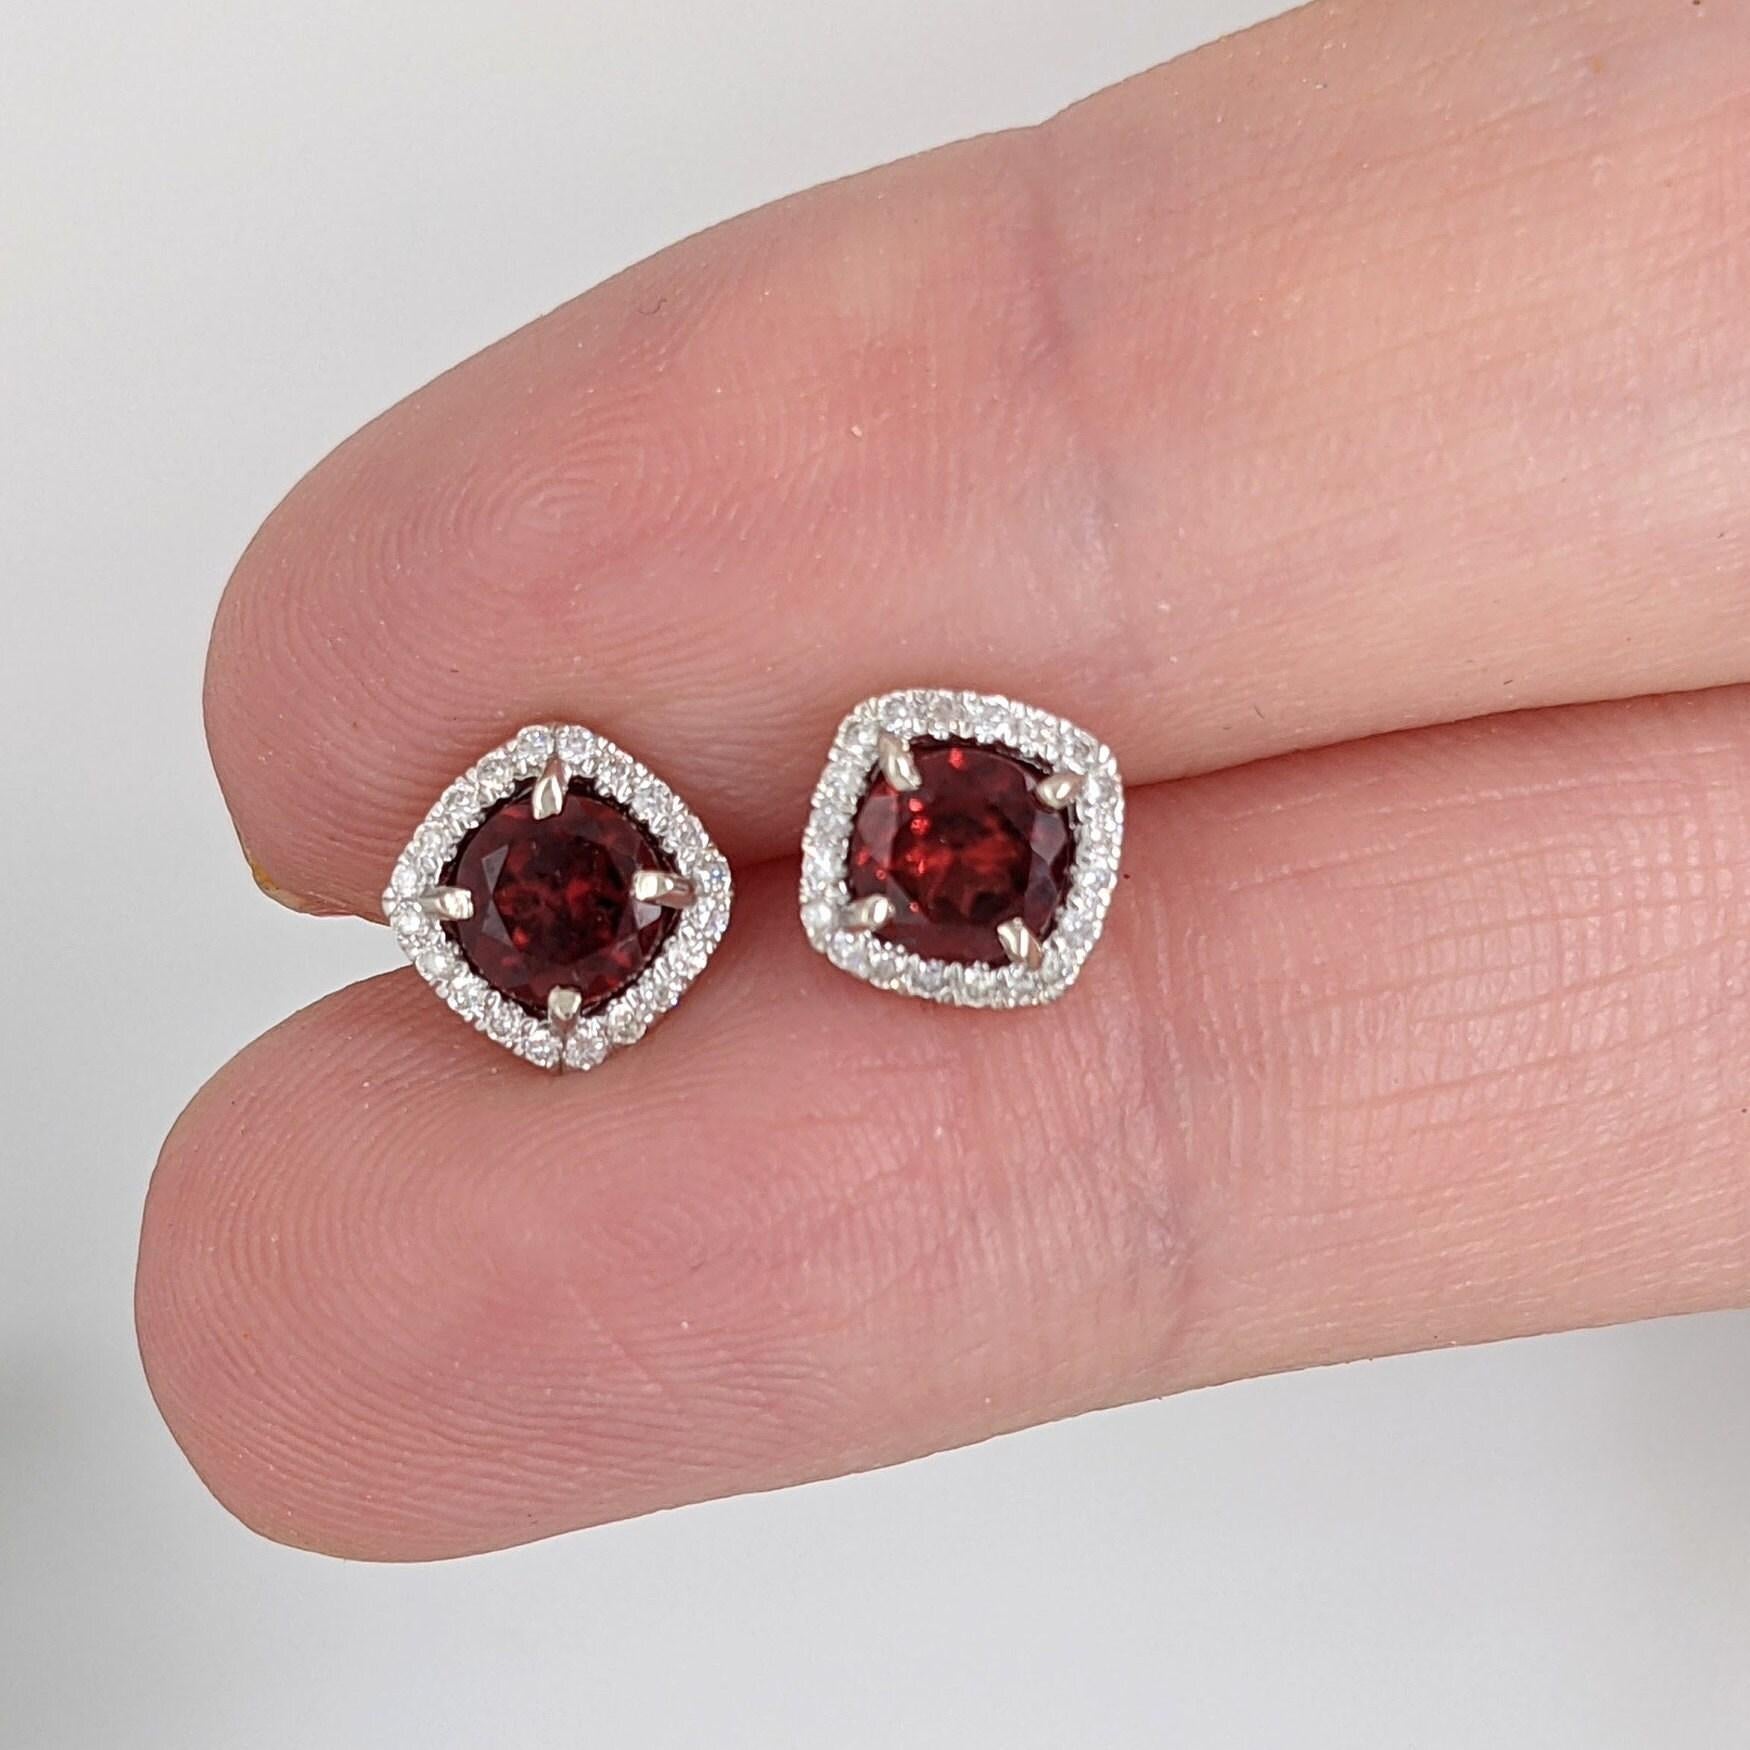 Red Garnet Stud Earrings with Cushion Diamond Halo in 14k White Gold | Rhodolite